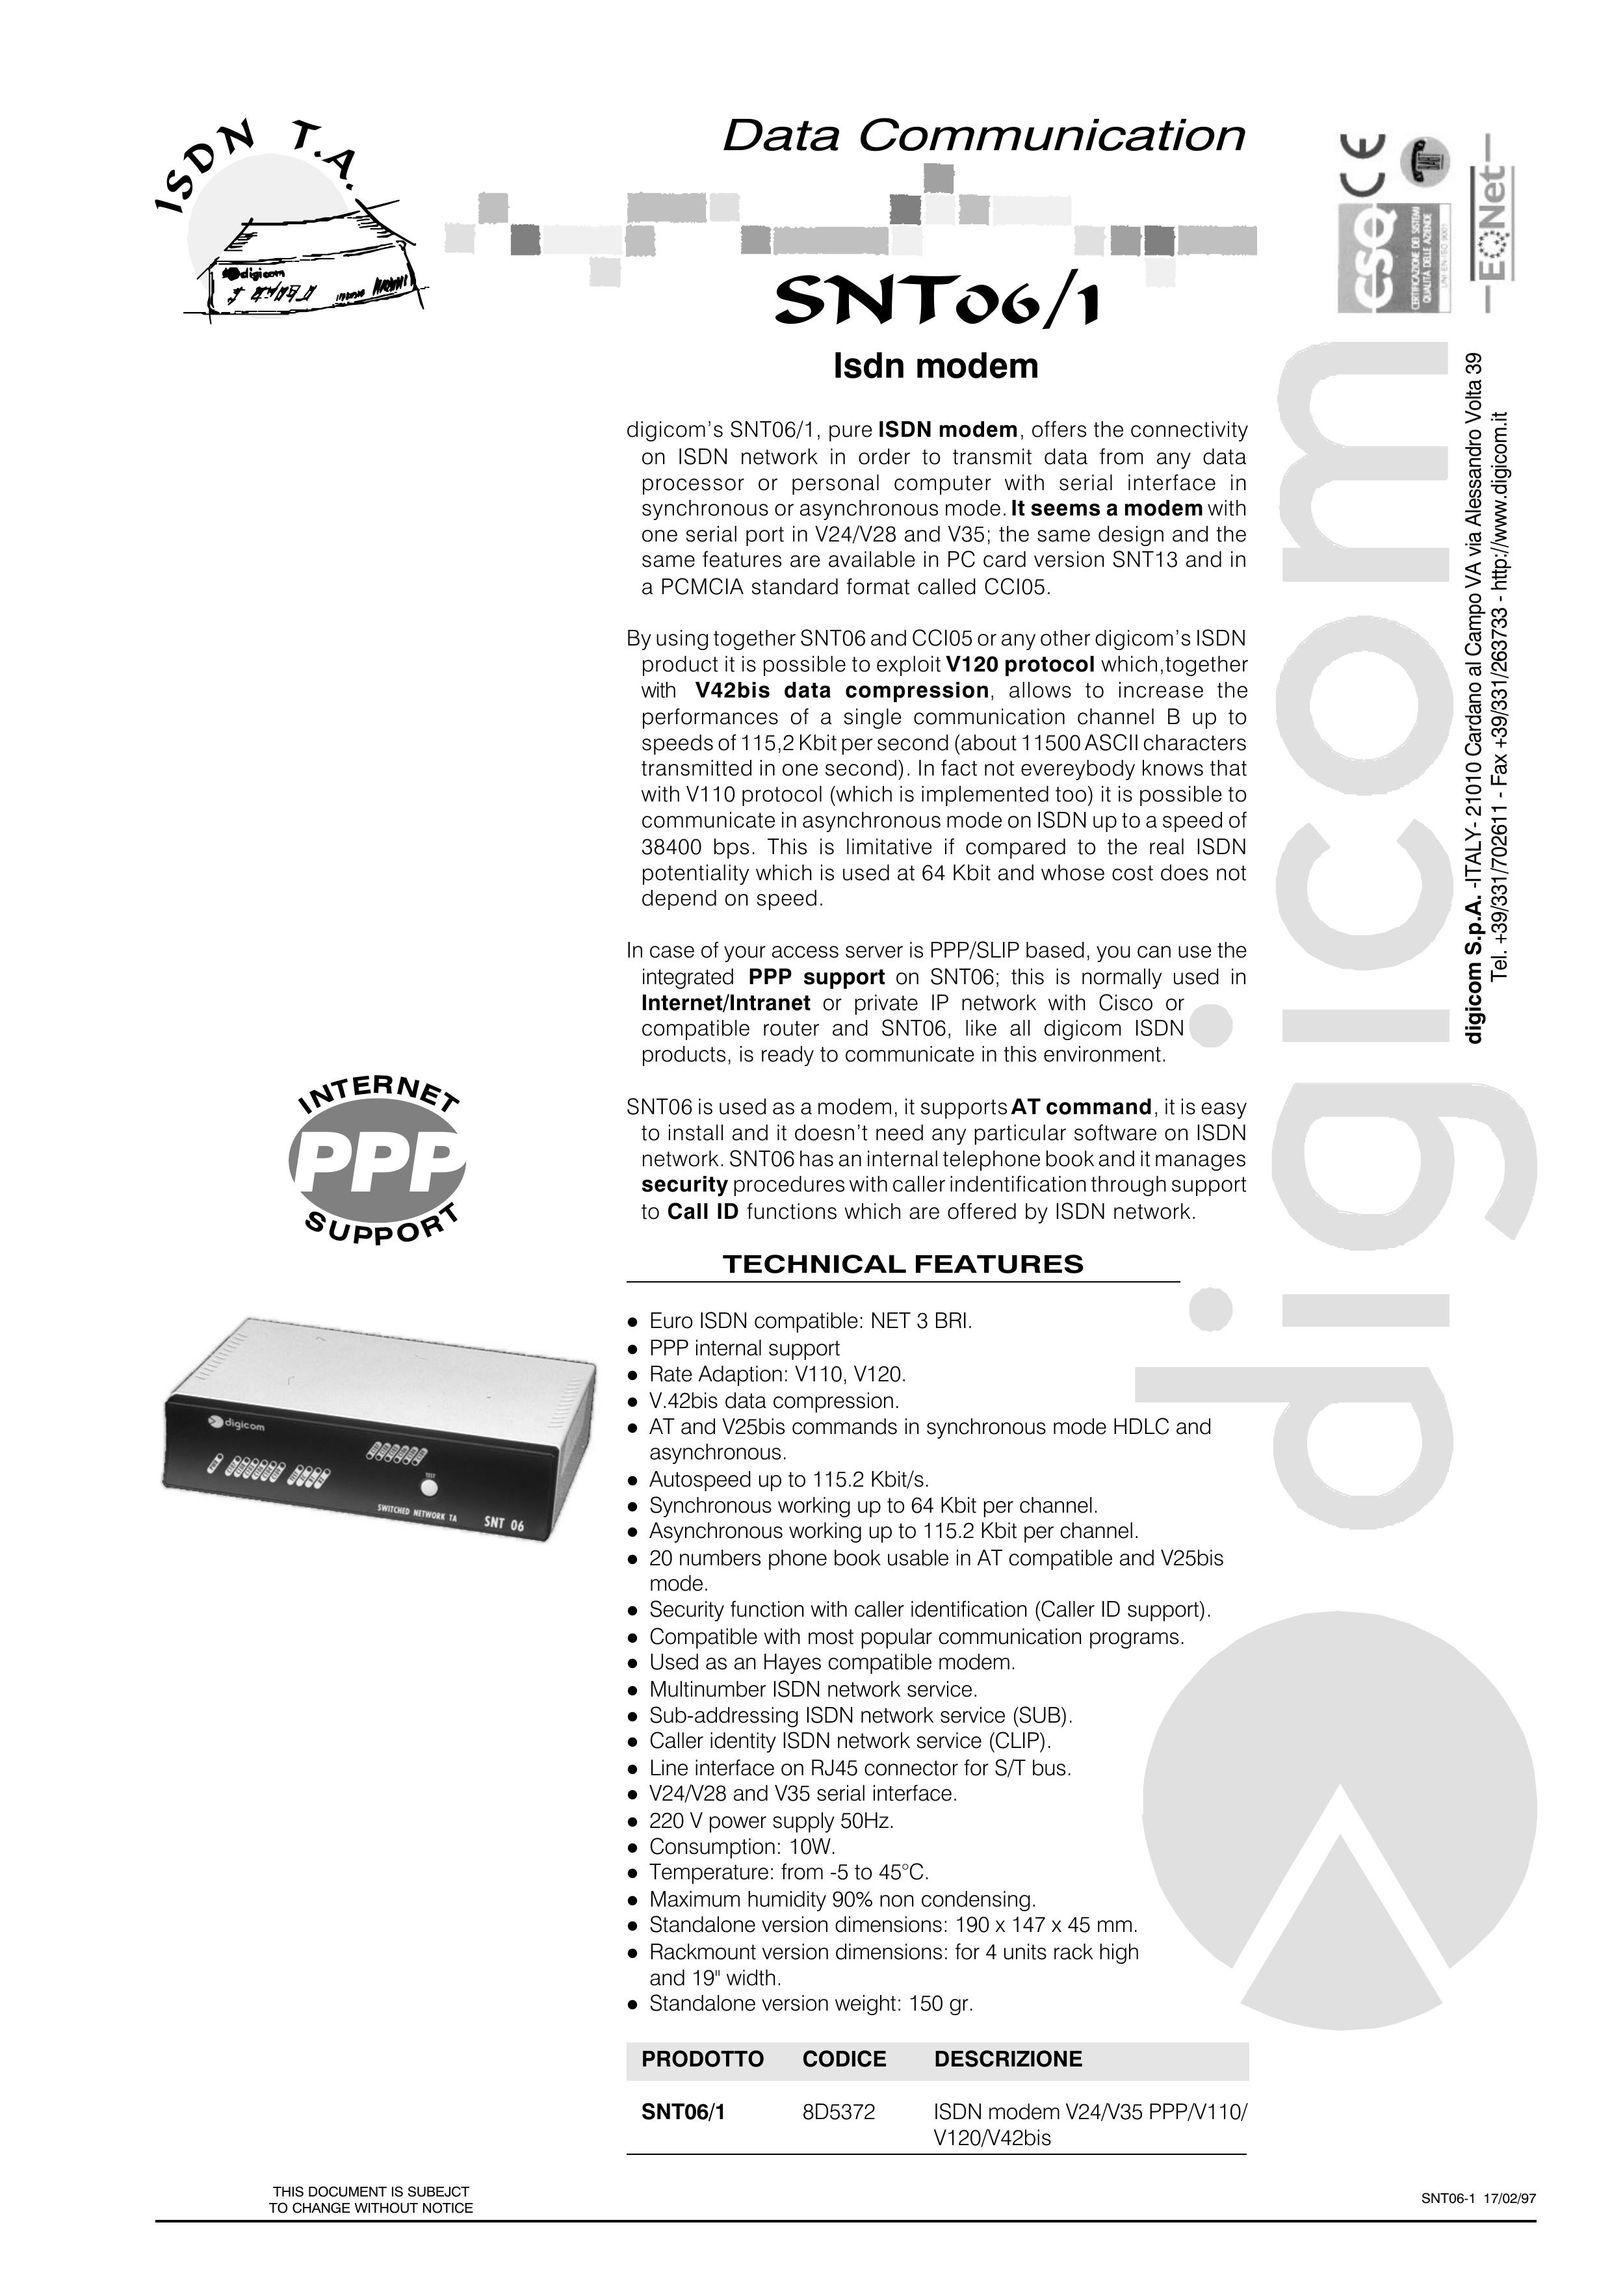 Digicom SNT06/1 Network Router User Manual